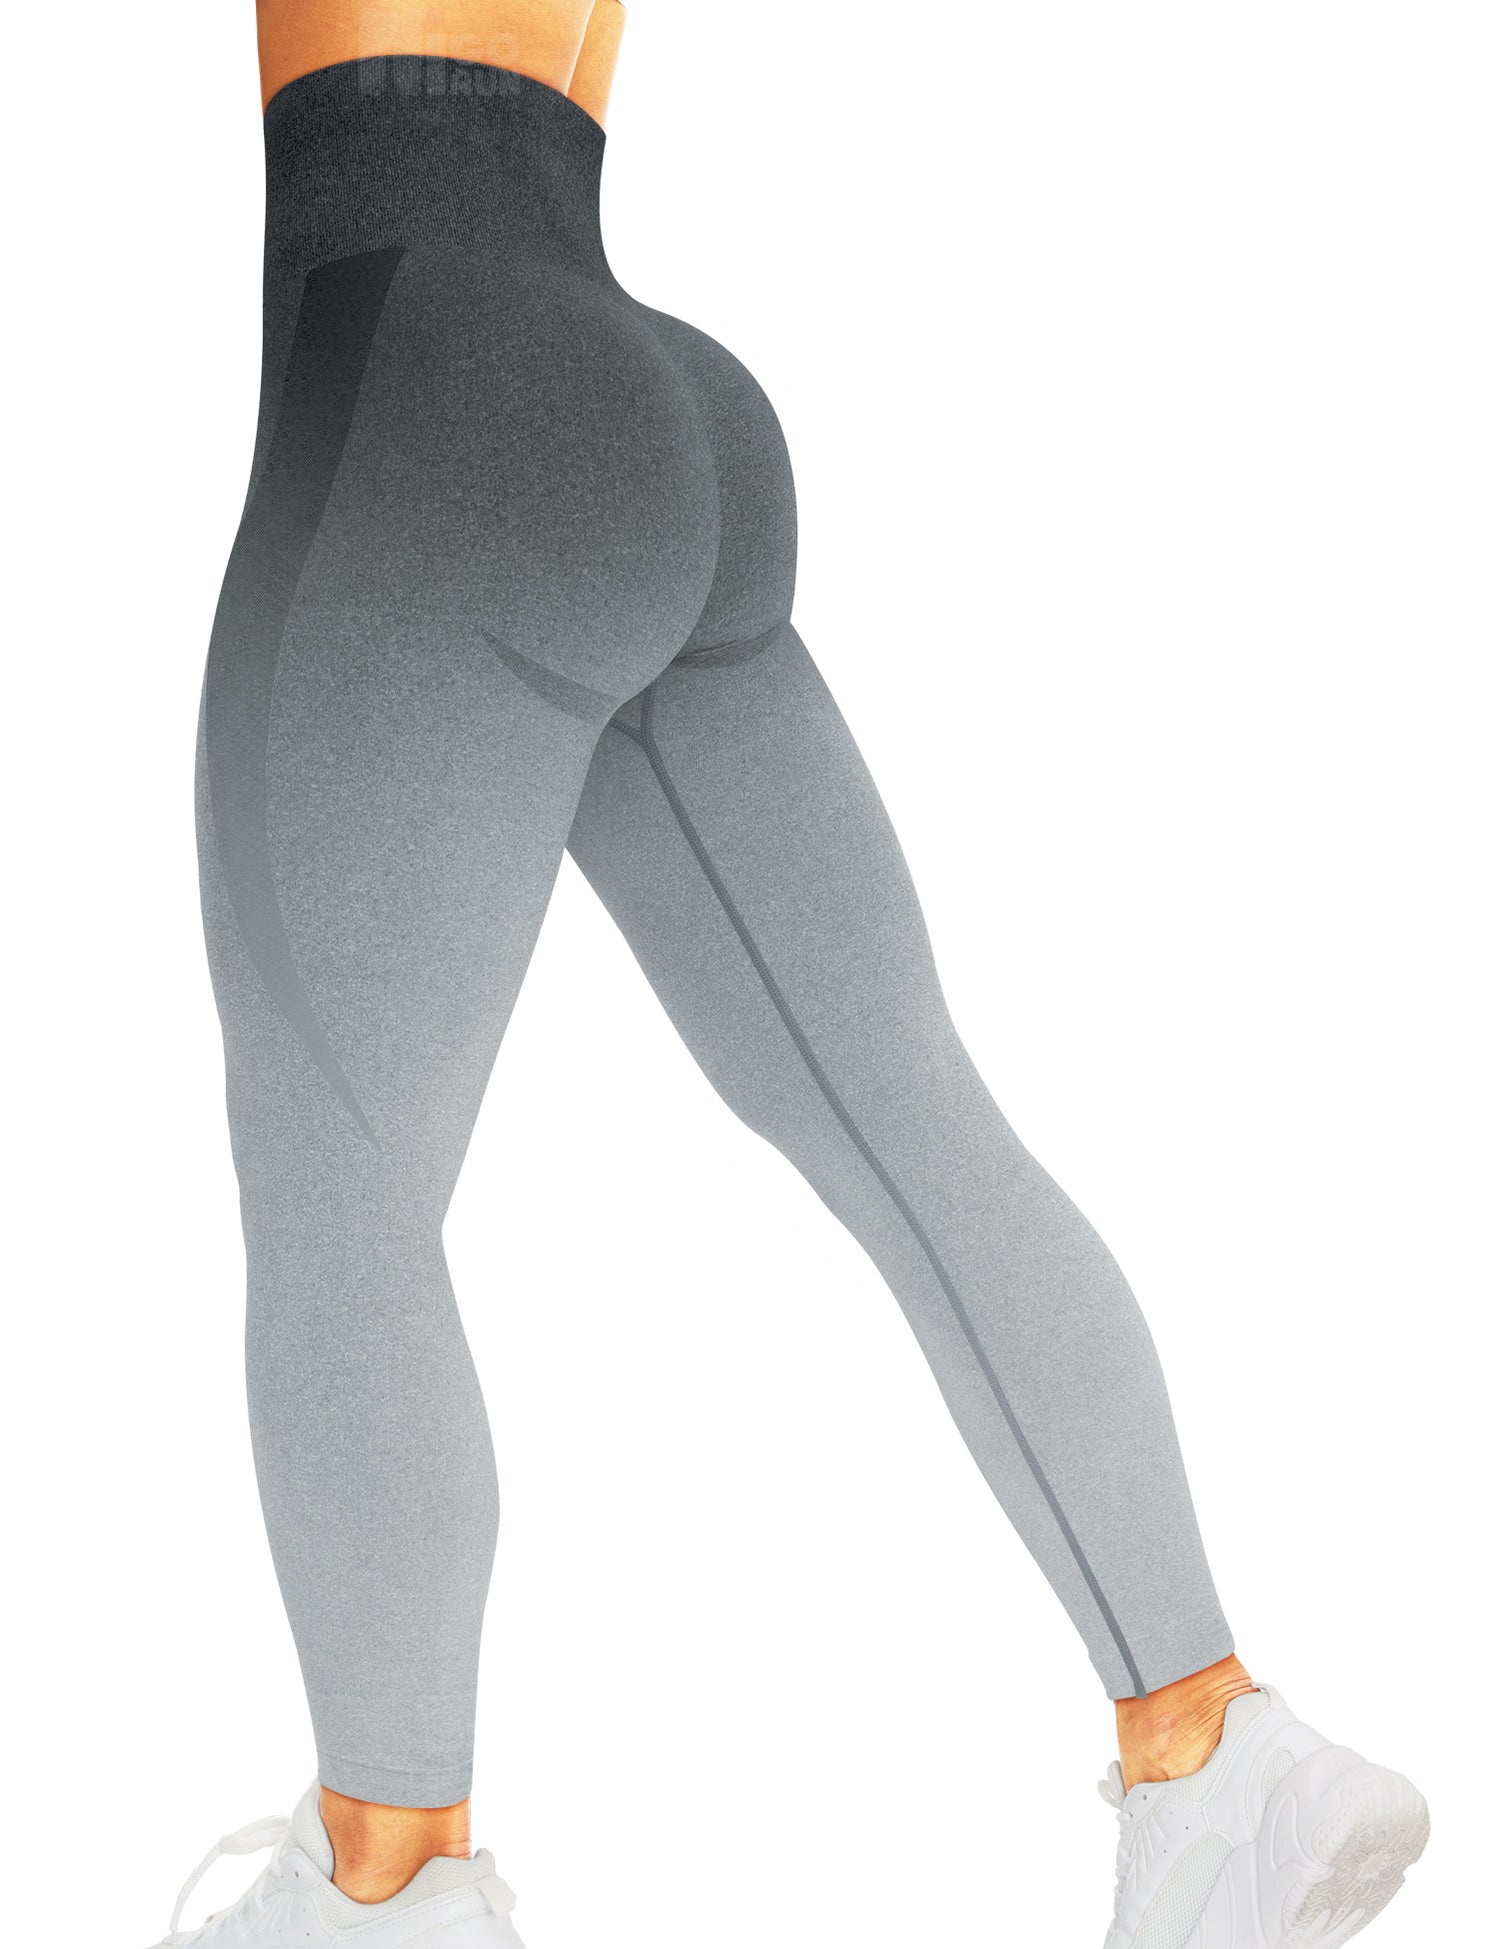 HIGORUN Women Seamless Leggings Smile Contour High Waist Workout